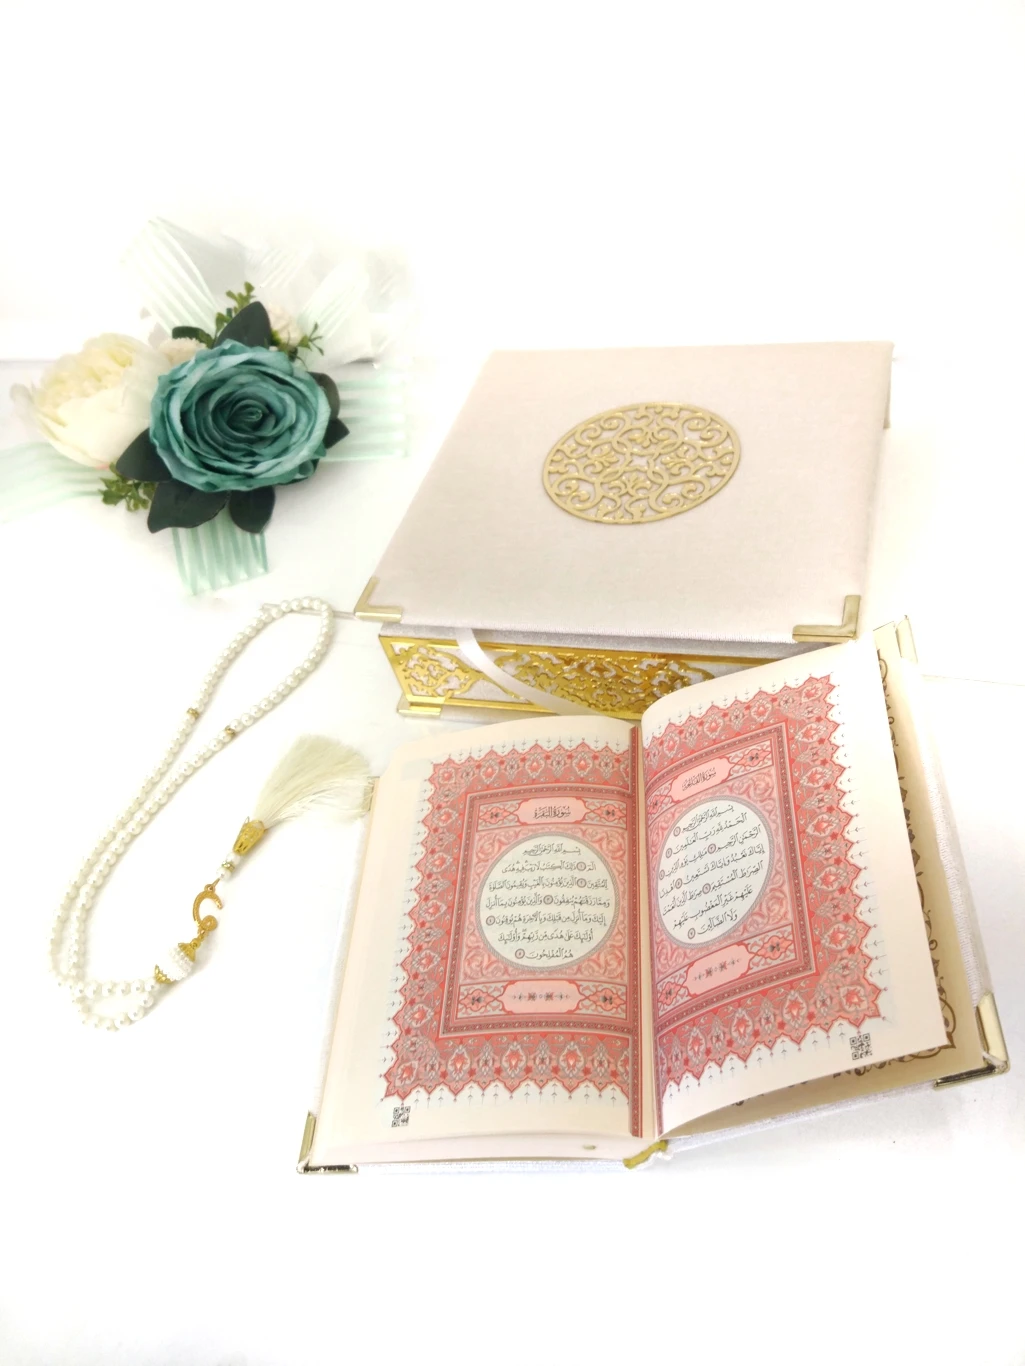 Коробочка для мусульман. Набор для мусульманина подарочный. Коран в бархате. Мусульманские наборы в подарок женщине.